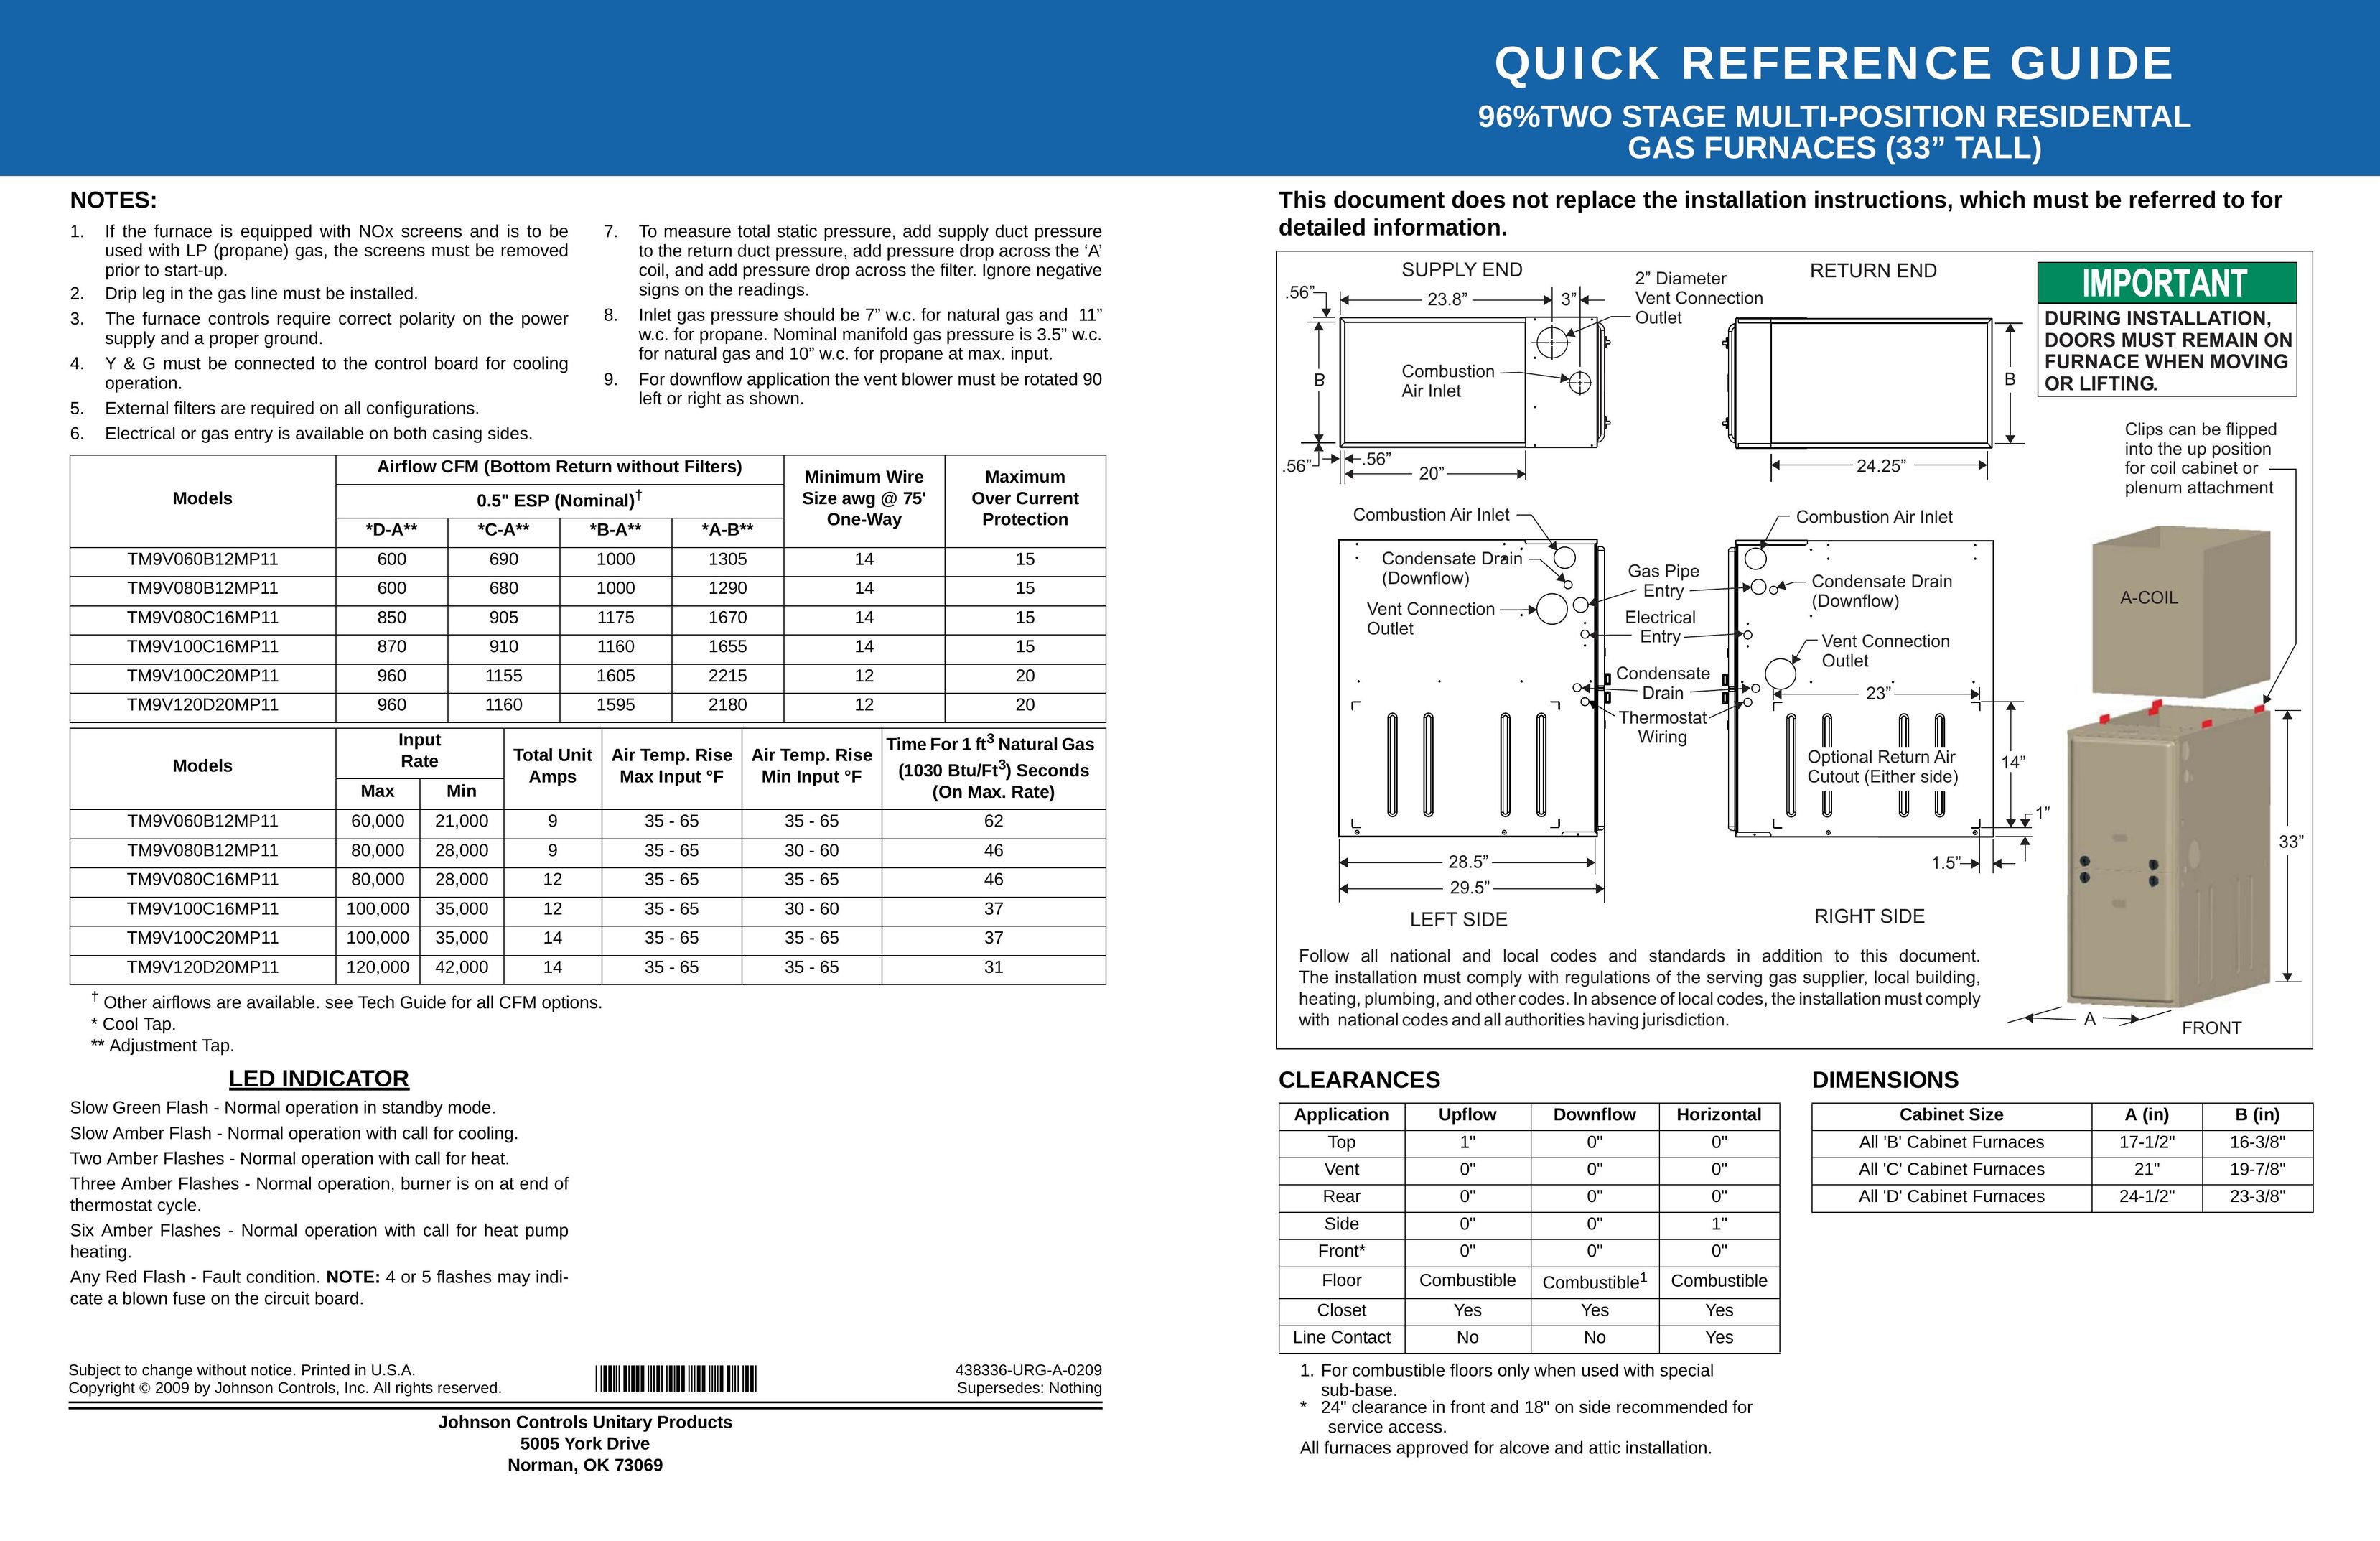 Johnson Controls TM9V100C16MP11 Furnace User Manual